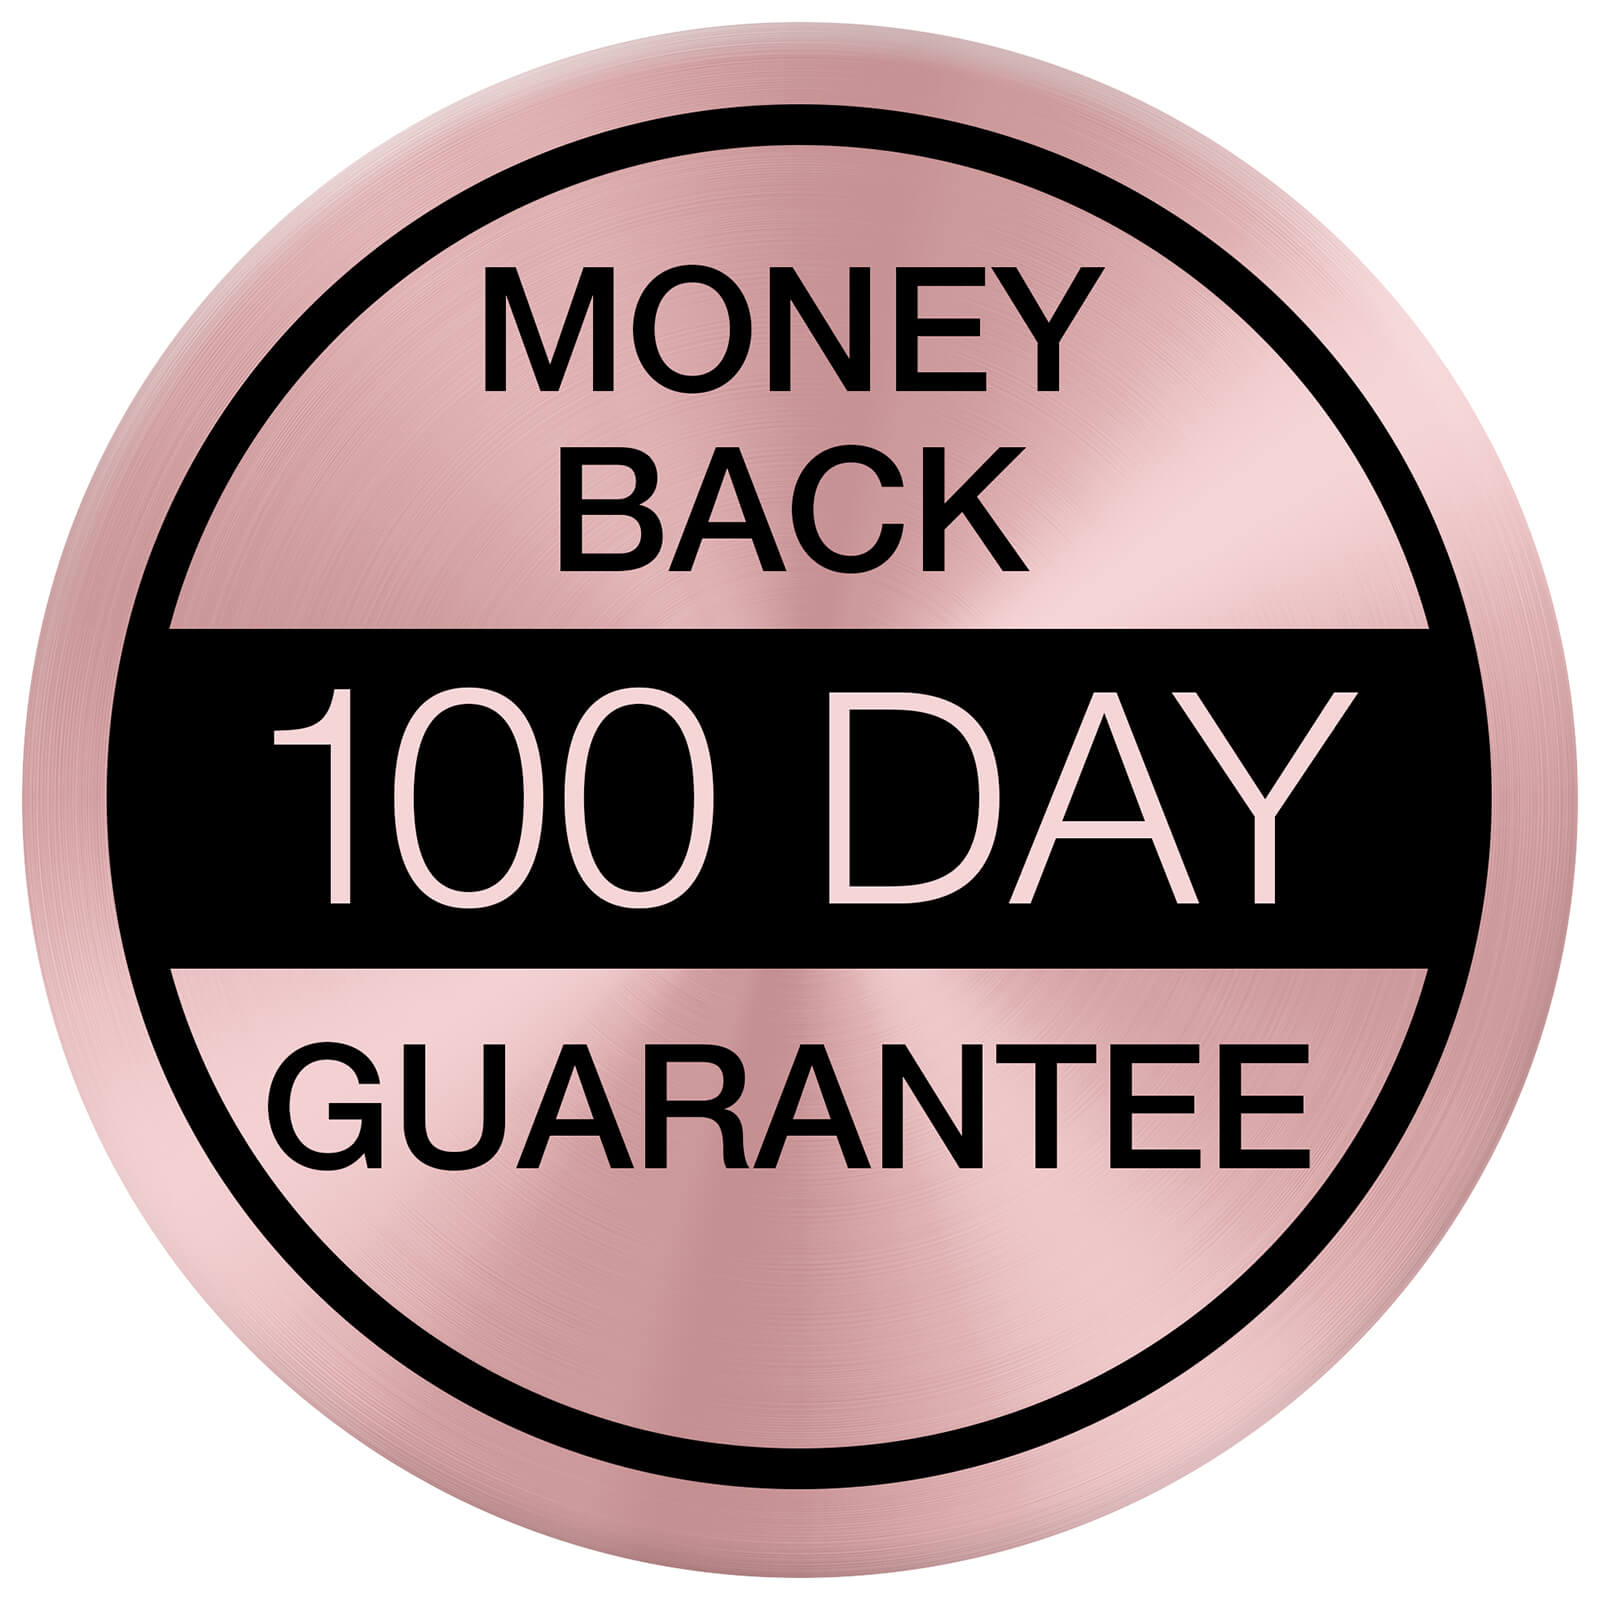 Money back 100 day guarantee